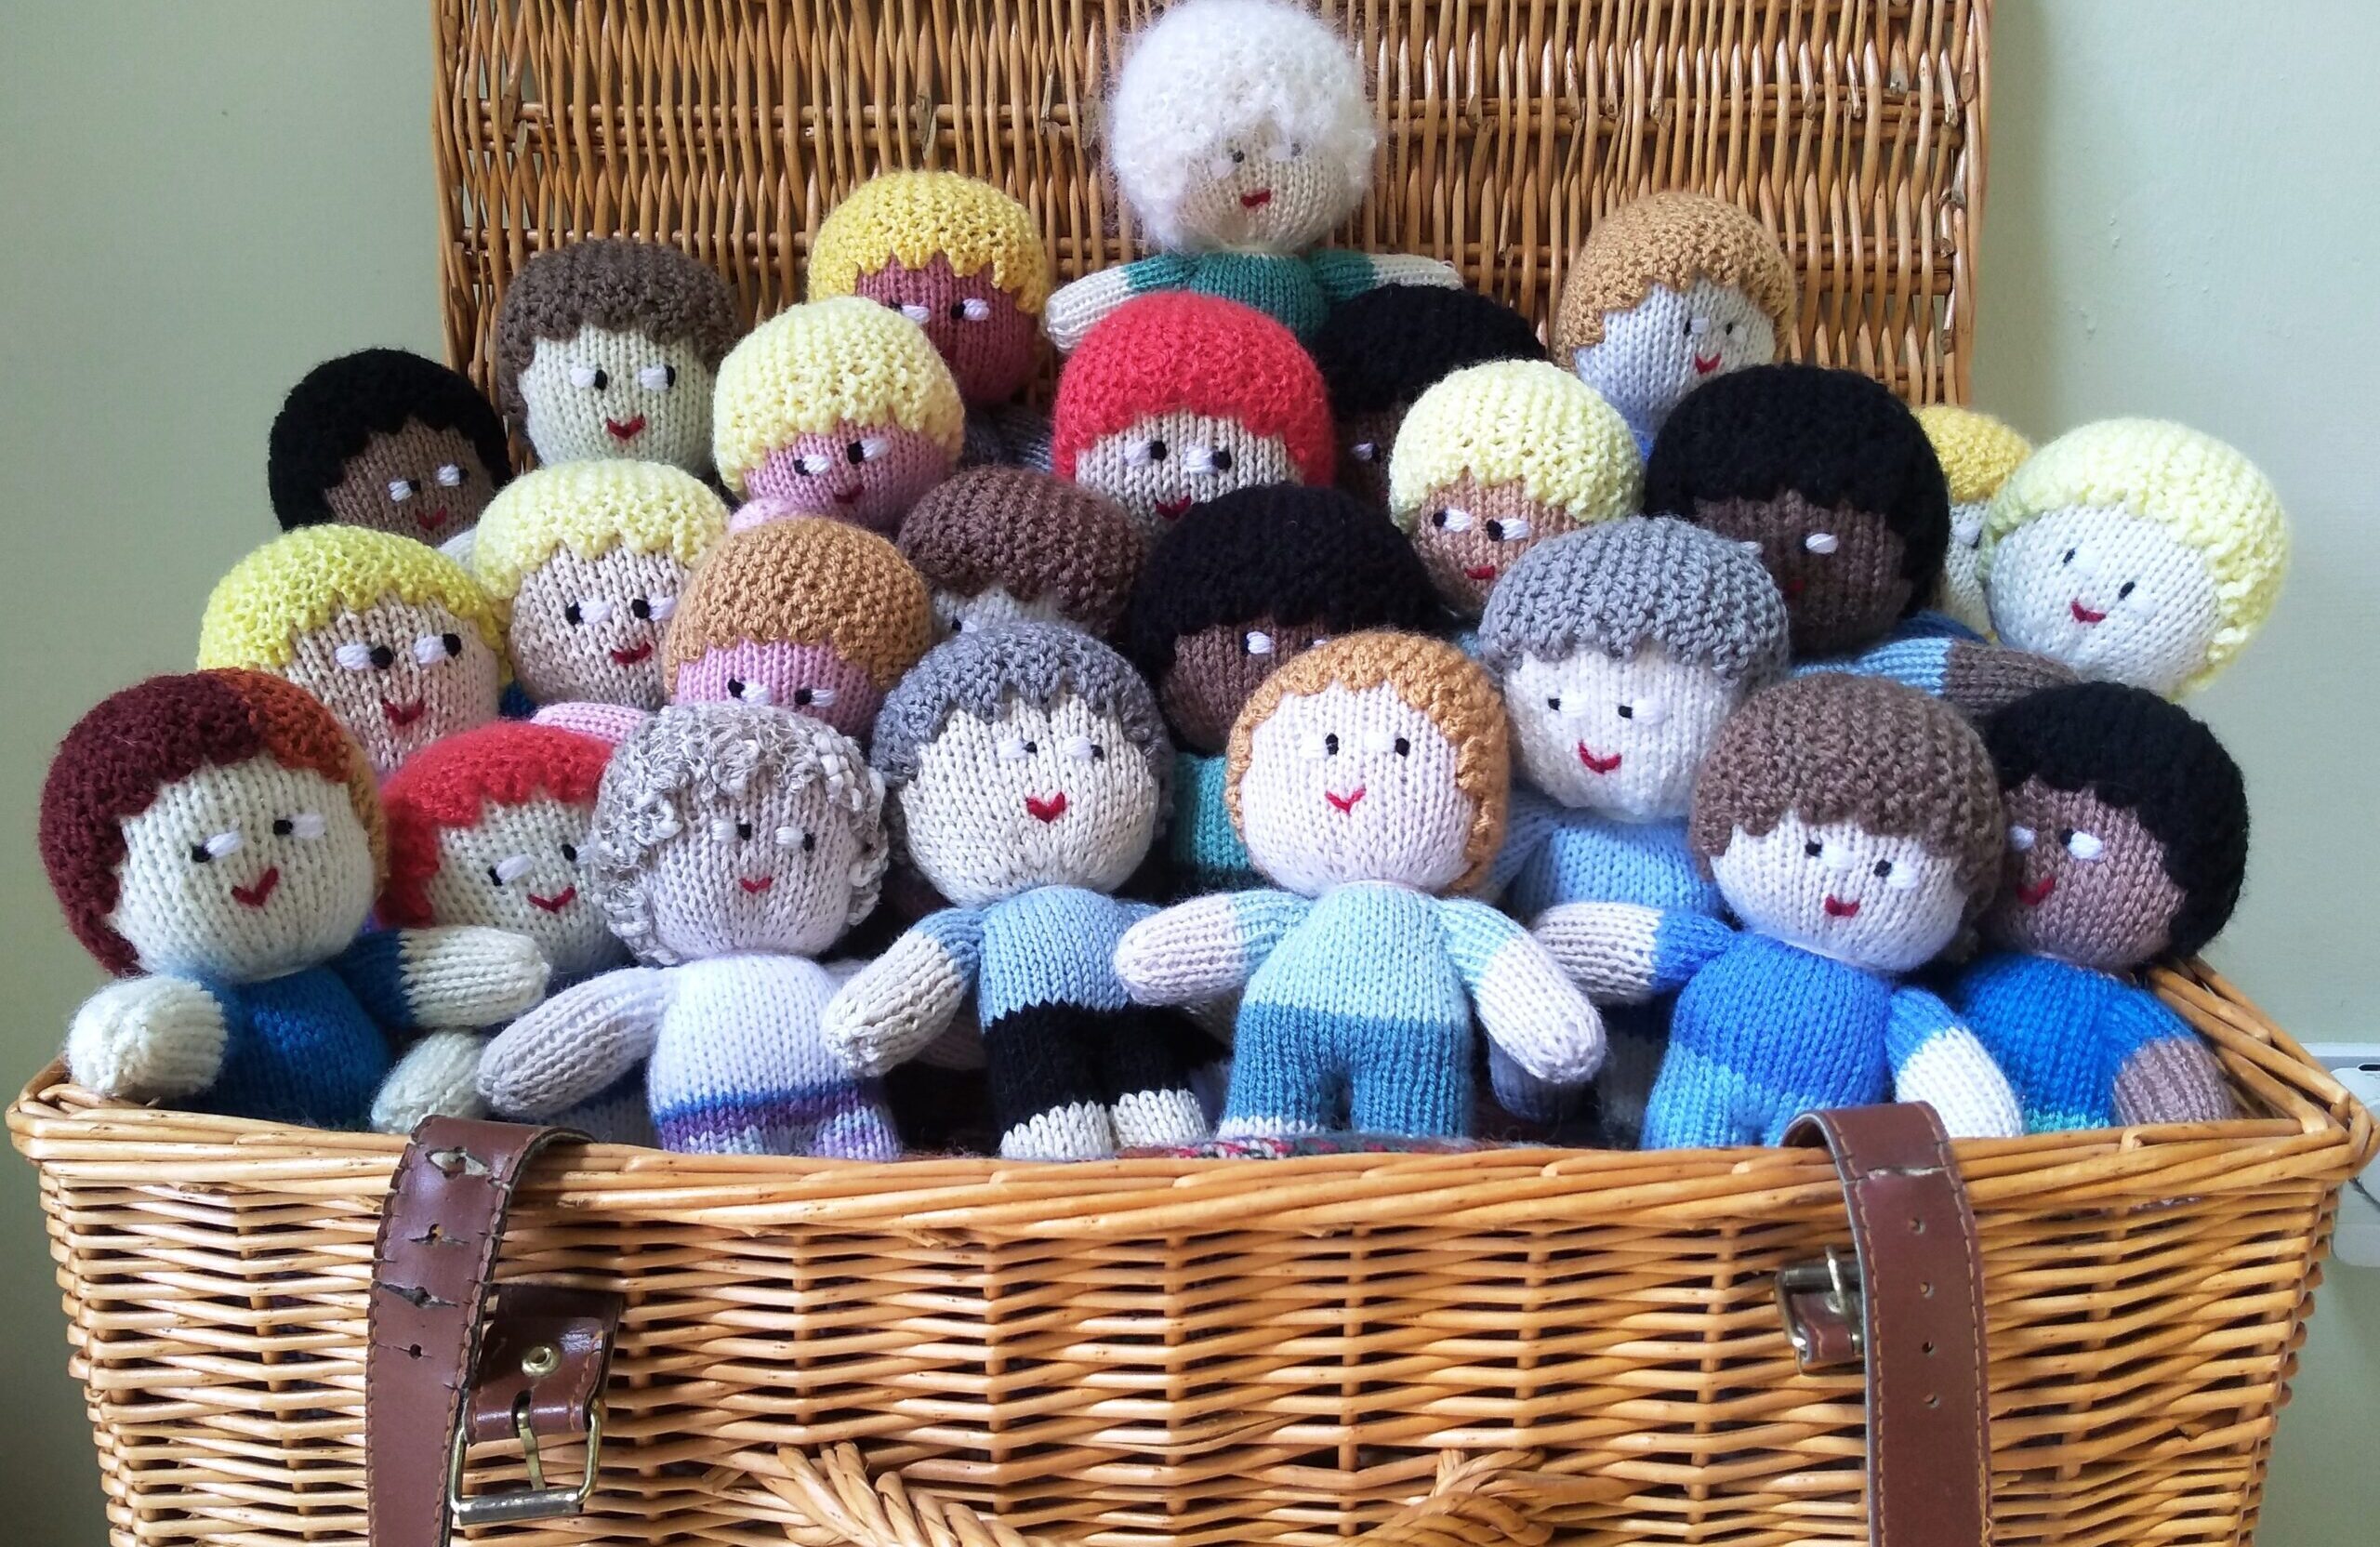 A picnic hamper full of knitted mascots.